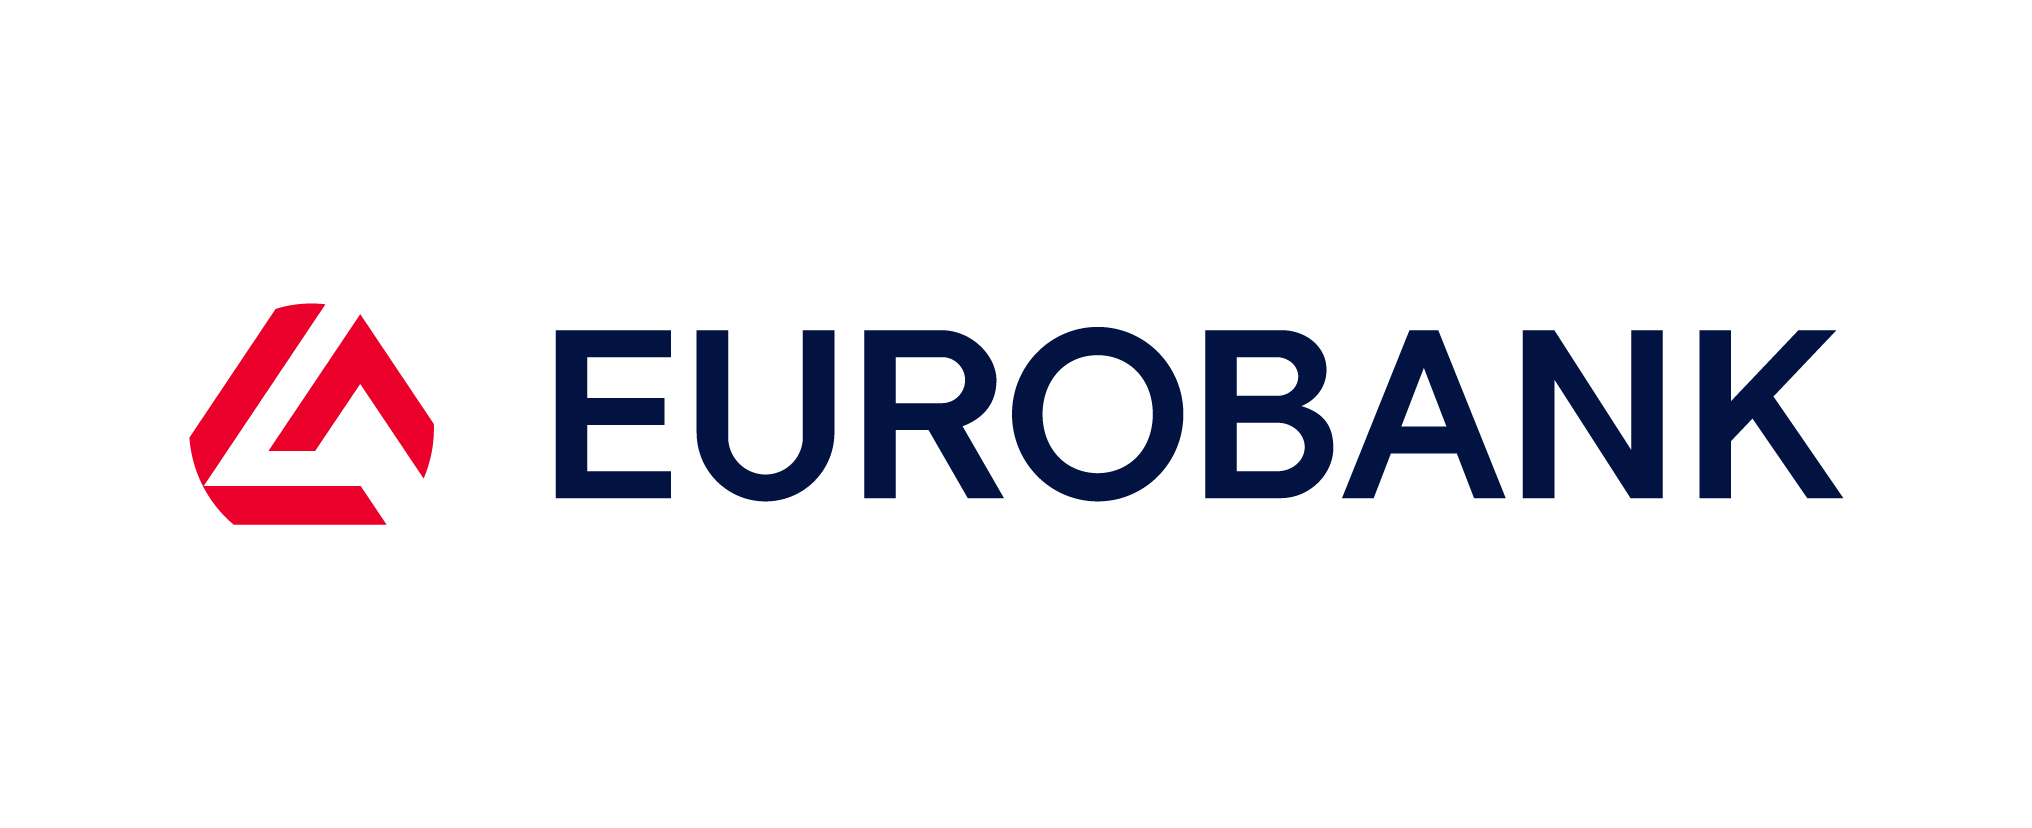 Eurobank Logo in white new